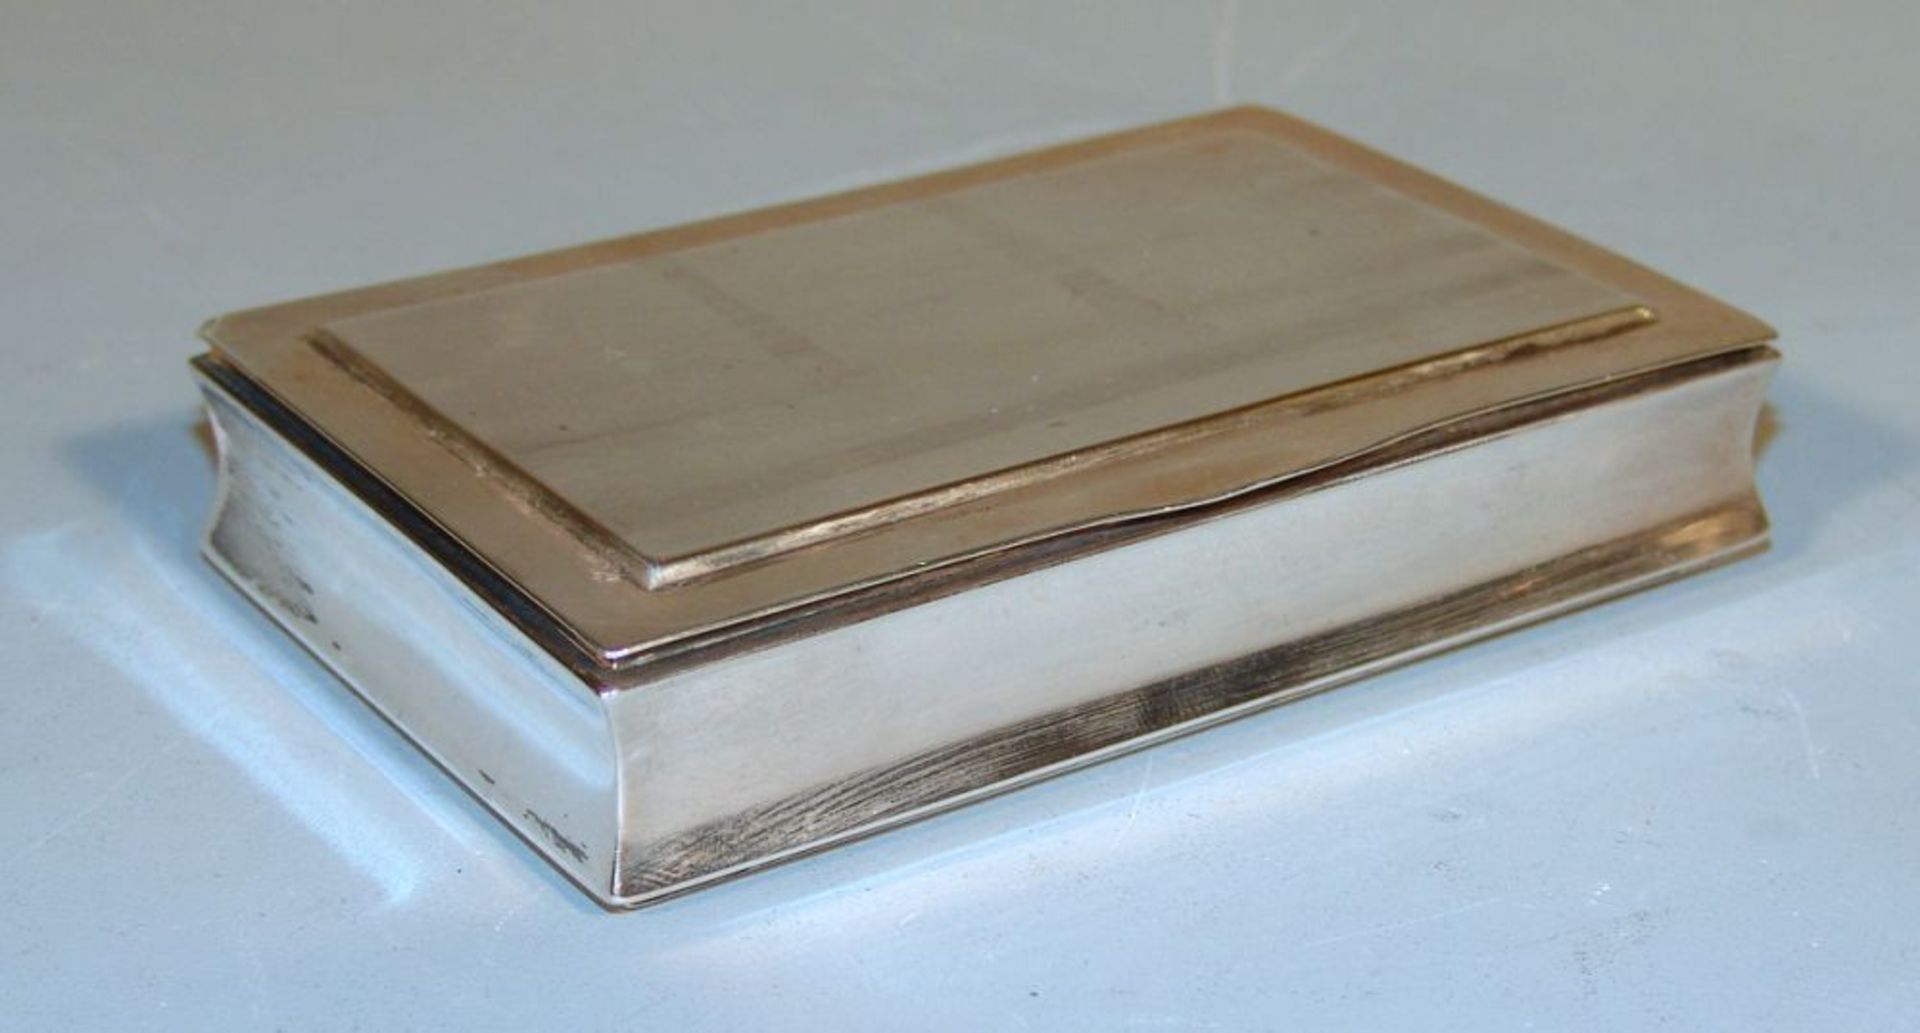 Zigarettenanbietdose 835-er Silber Art Deco  längsrechteckige Form mit Klappdeckel, am Boden